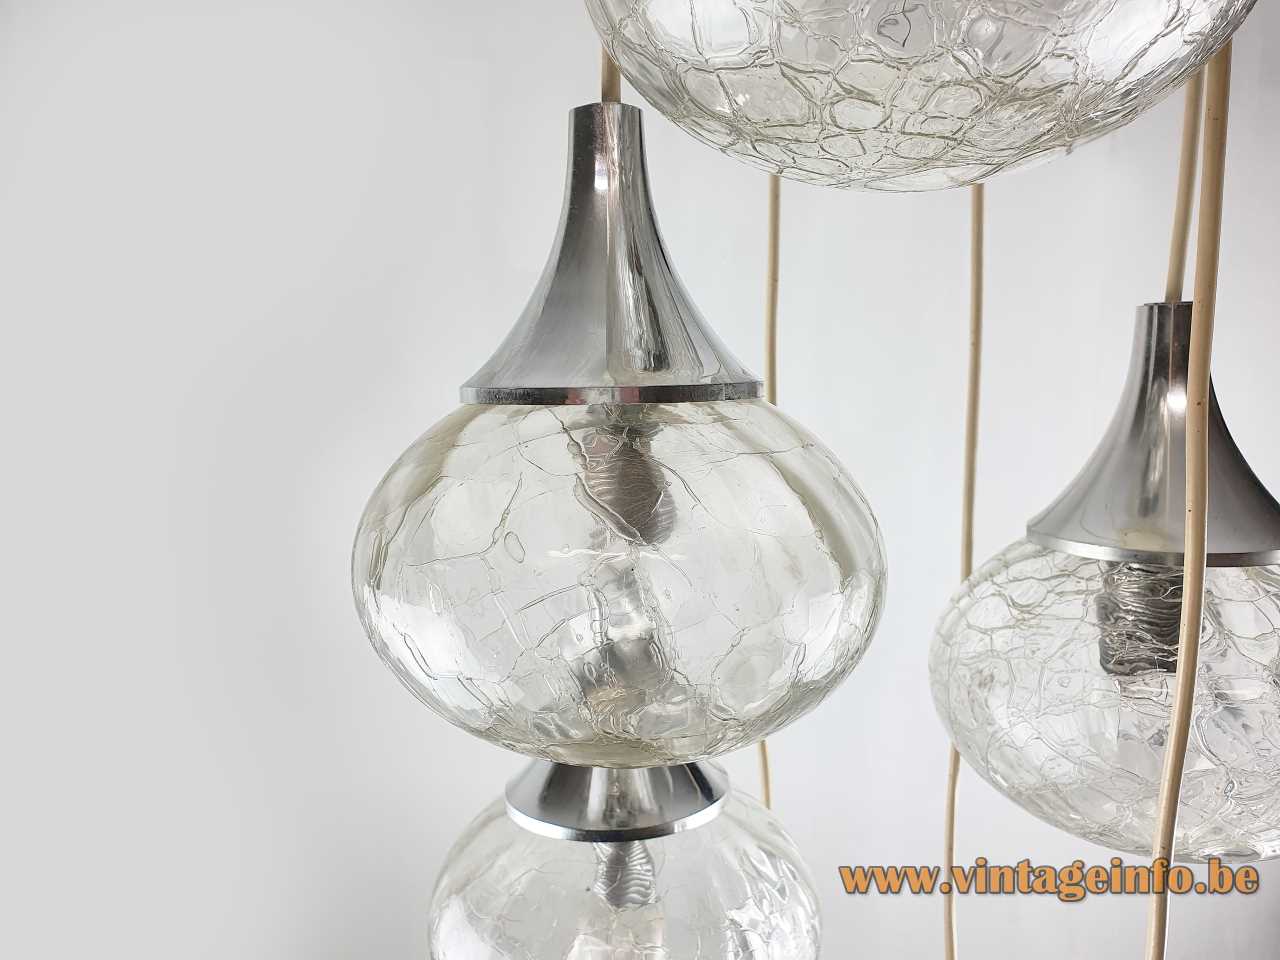 Hustadt crackle glass globes cascade chandelier 7 pendant lamps conical chrome top 1970s Hustadt-Leuchten Germany